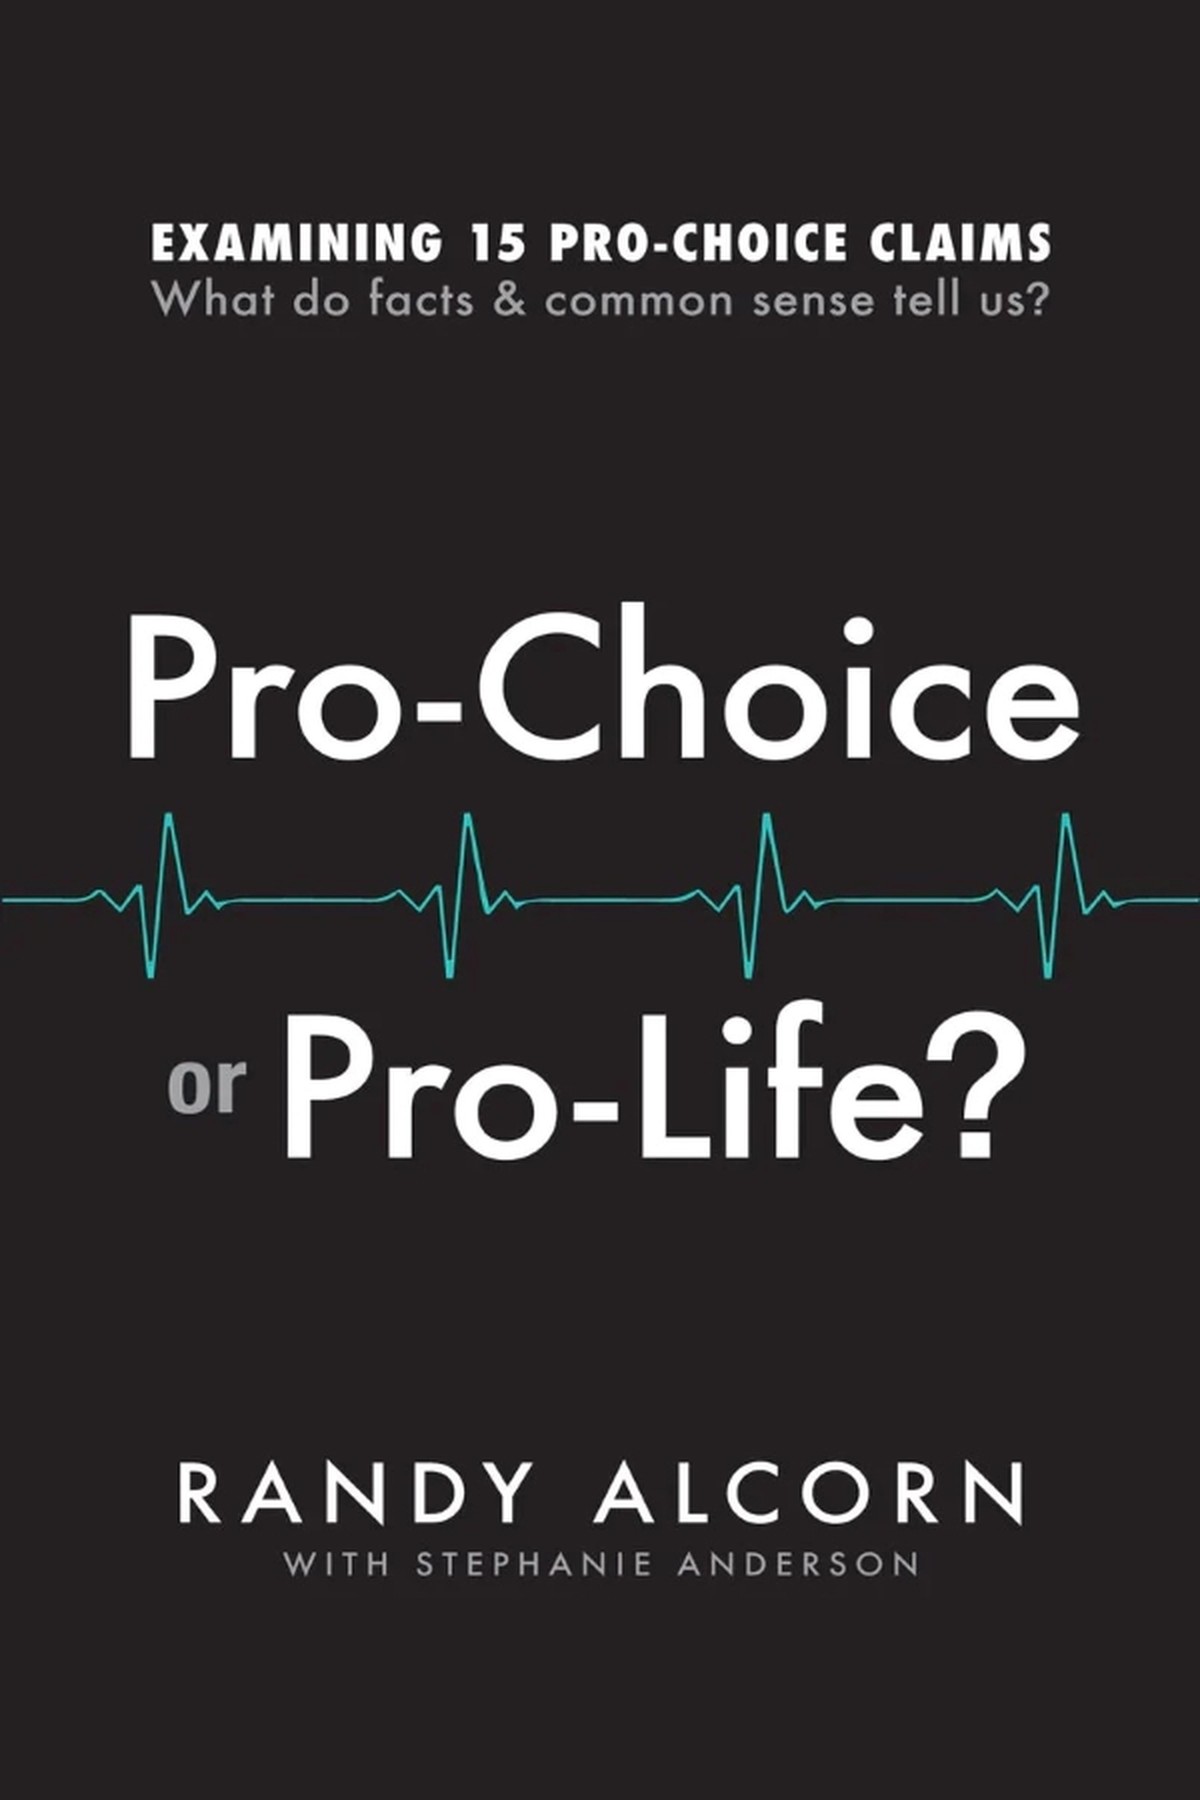 5. Pro-Choice or Pro-Life? by Randy Alcorn